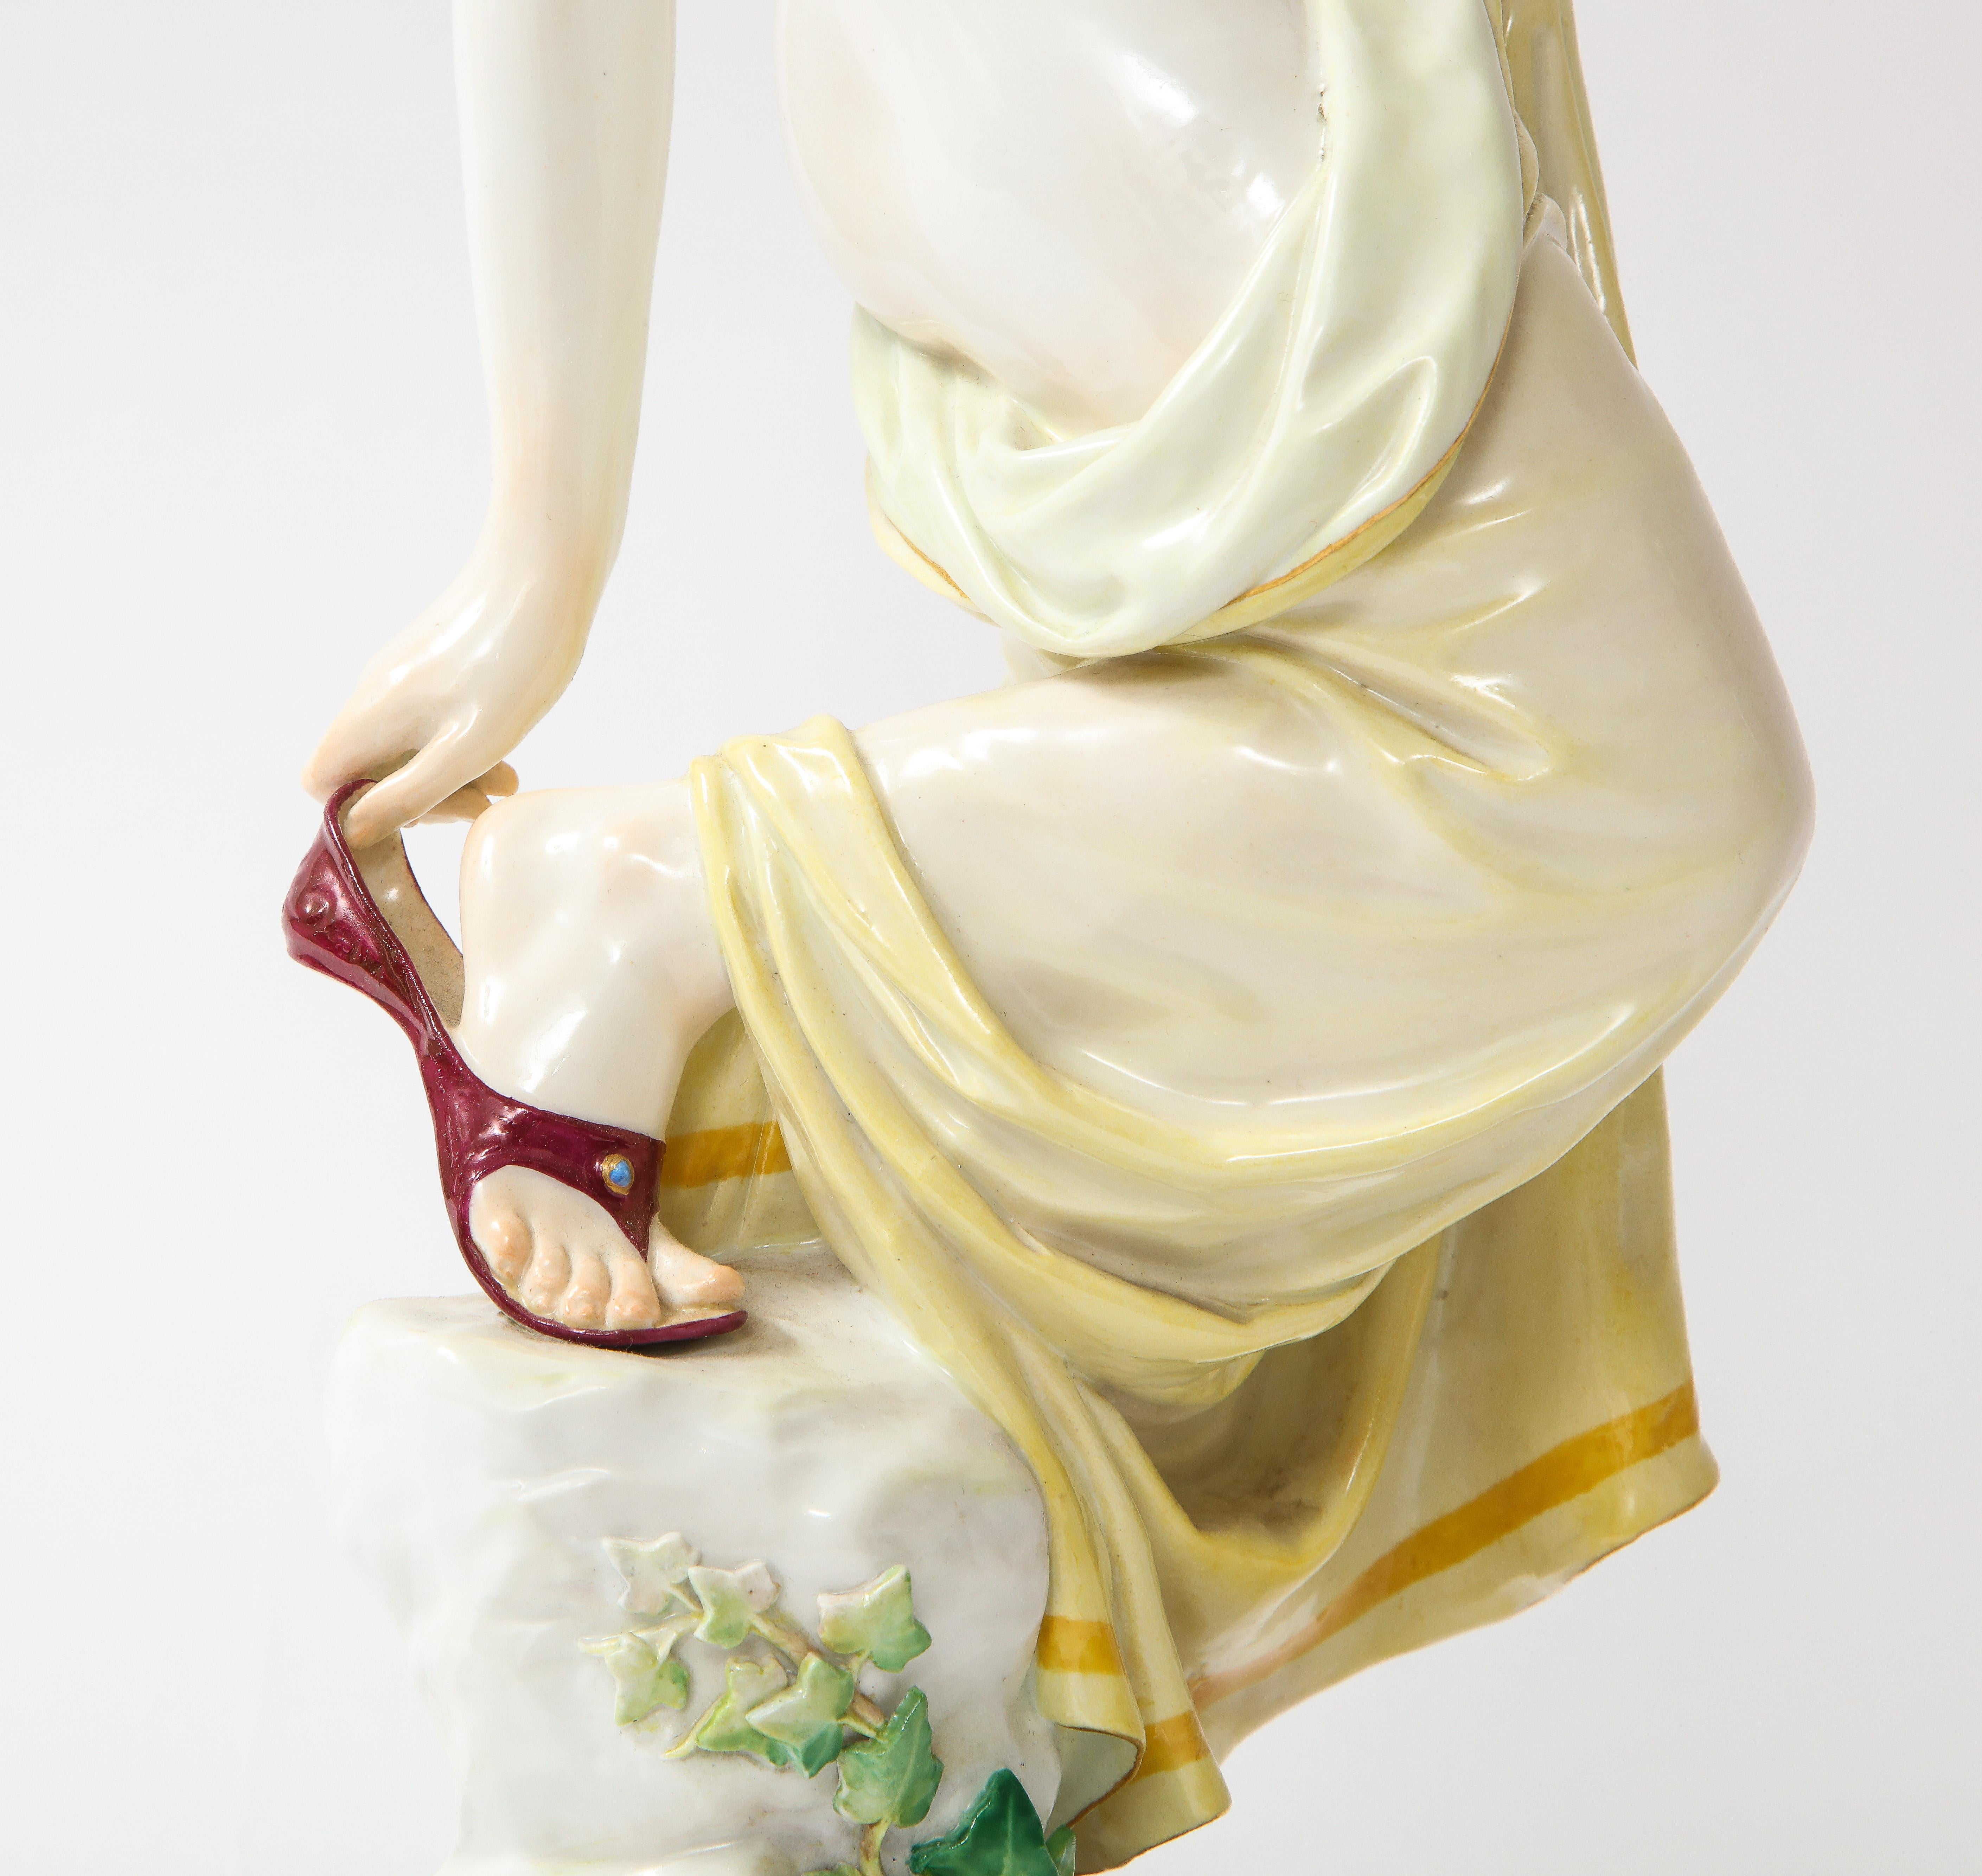 A 19th C. Meissen Porcelain Female Nude Figurine After The Bath, R. Ockelmann For Sale 3